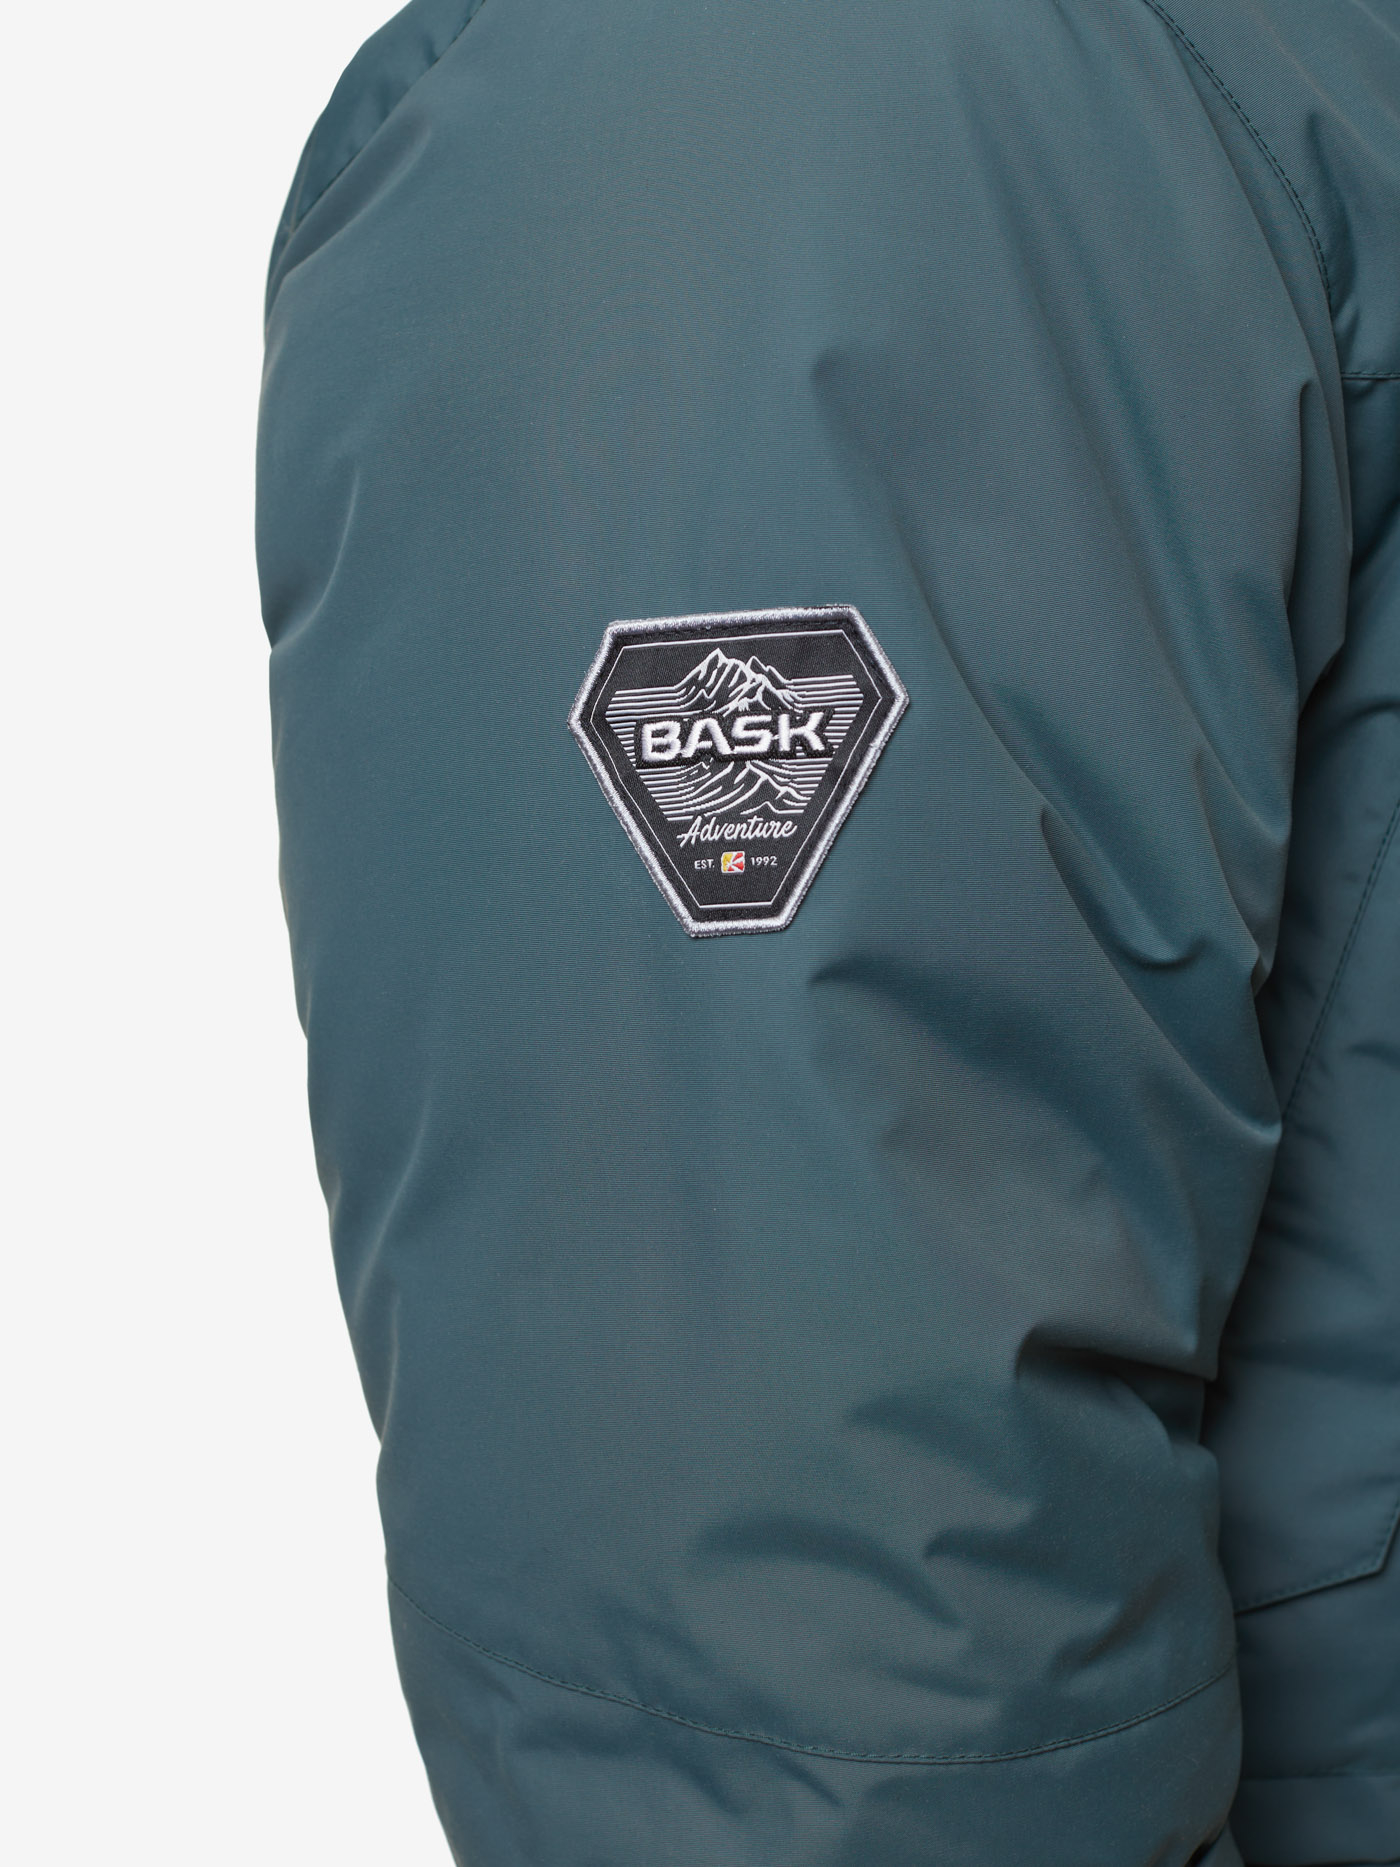 Куртка BASK, размер 60, цвет 9319 21228-9319-060 Alaska v3 - фото 5